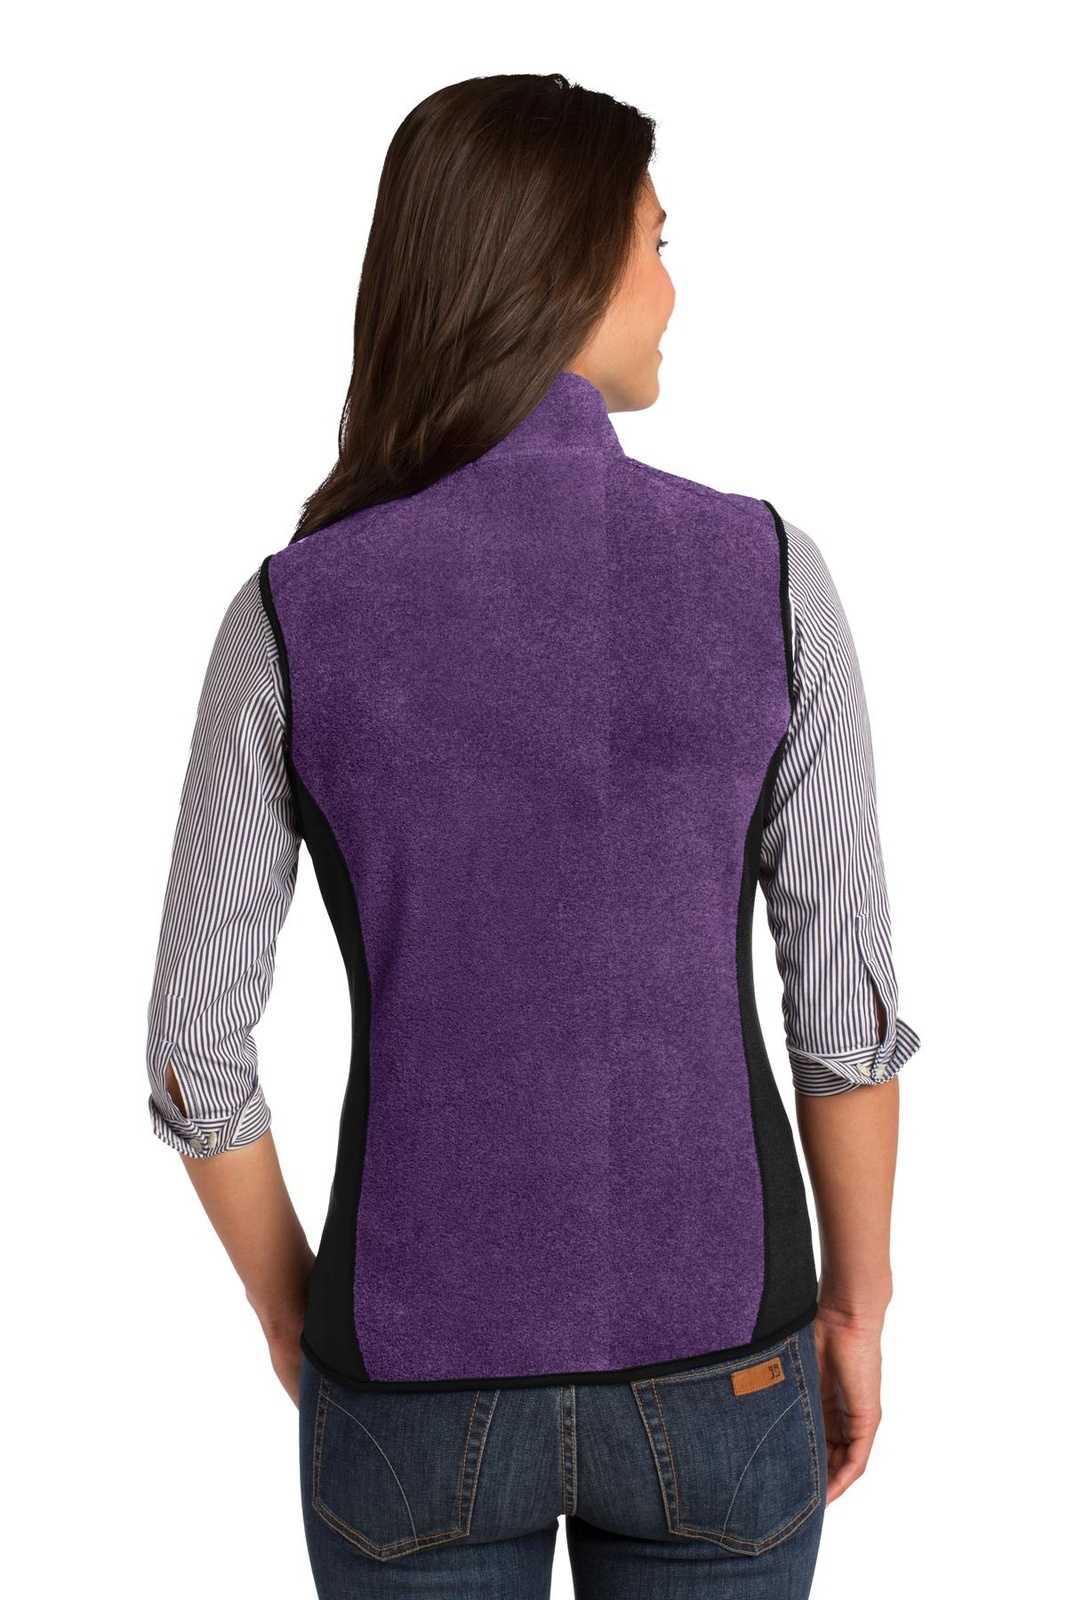 Port Authority L228 Ladies R-Tek Pro Fleece Full-Zip Vest - Purple Heather Black - HIT a Double - 1